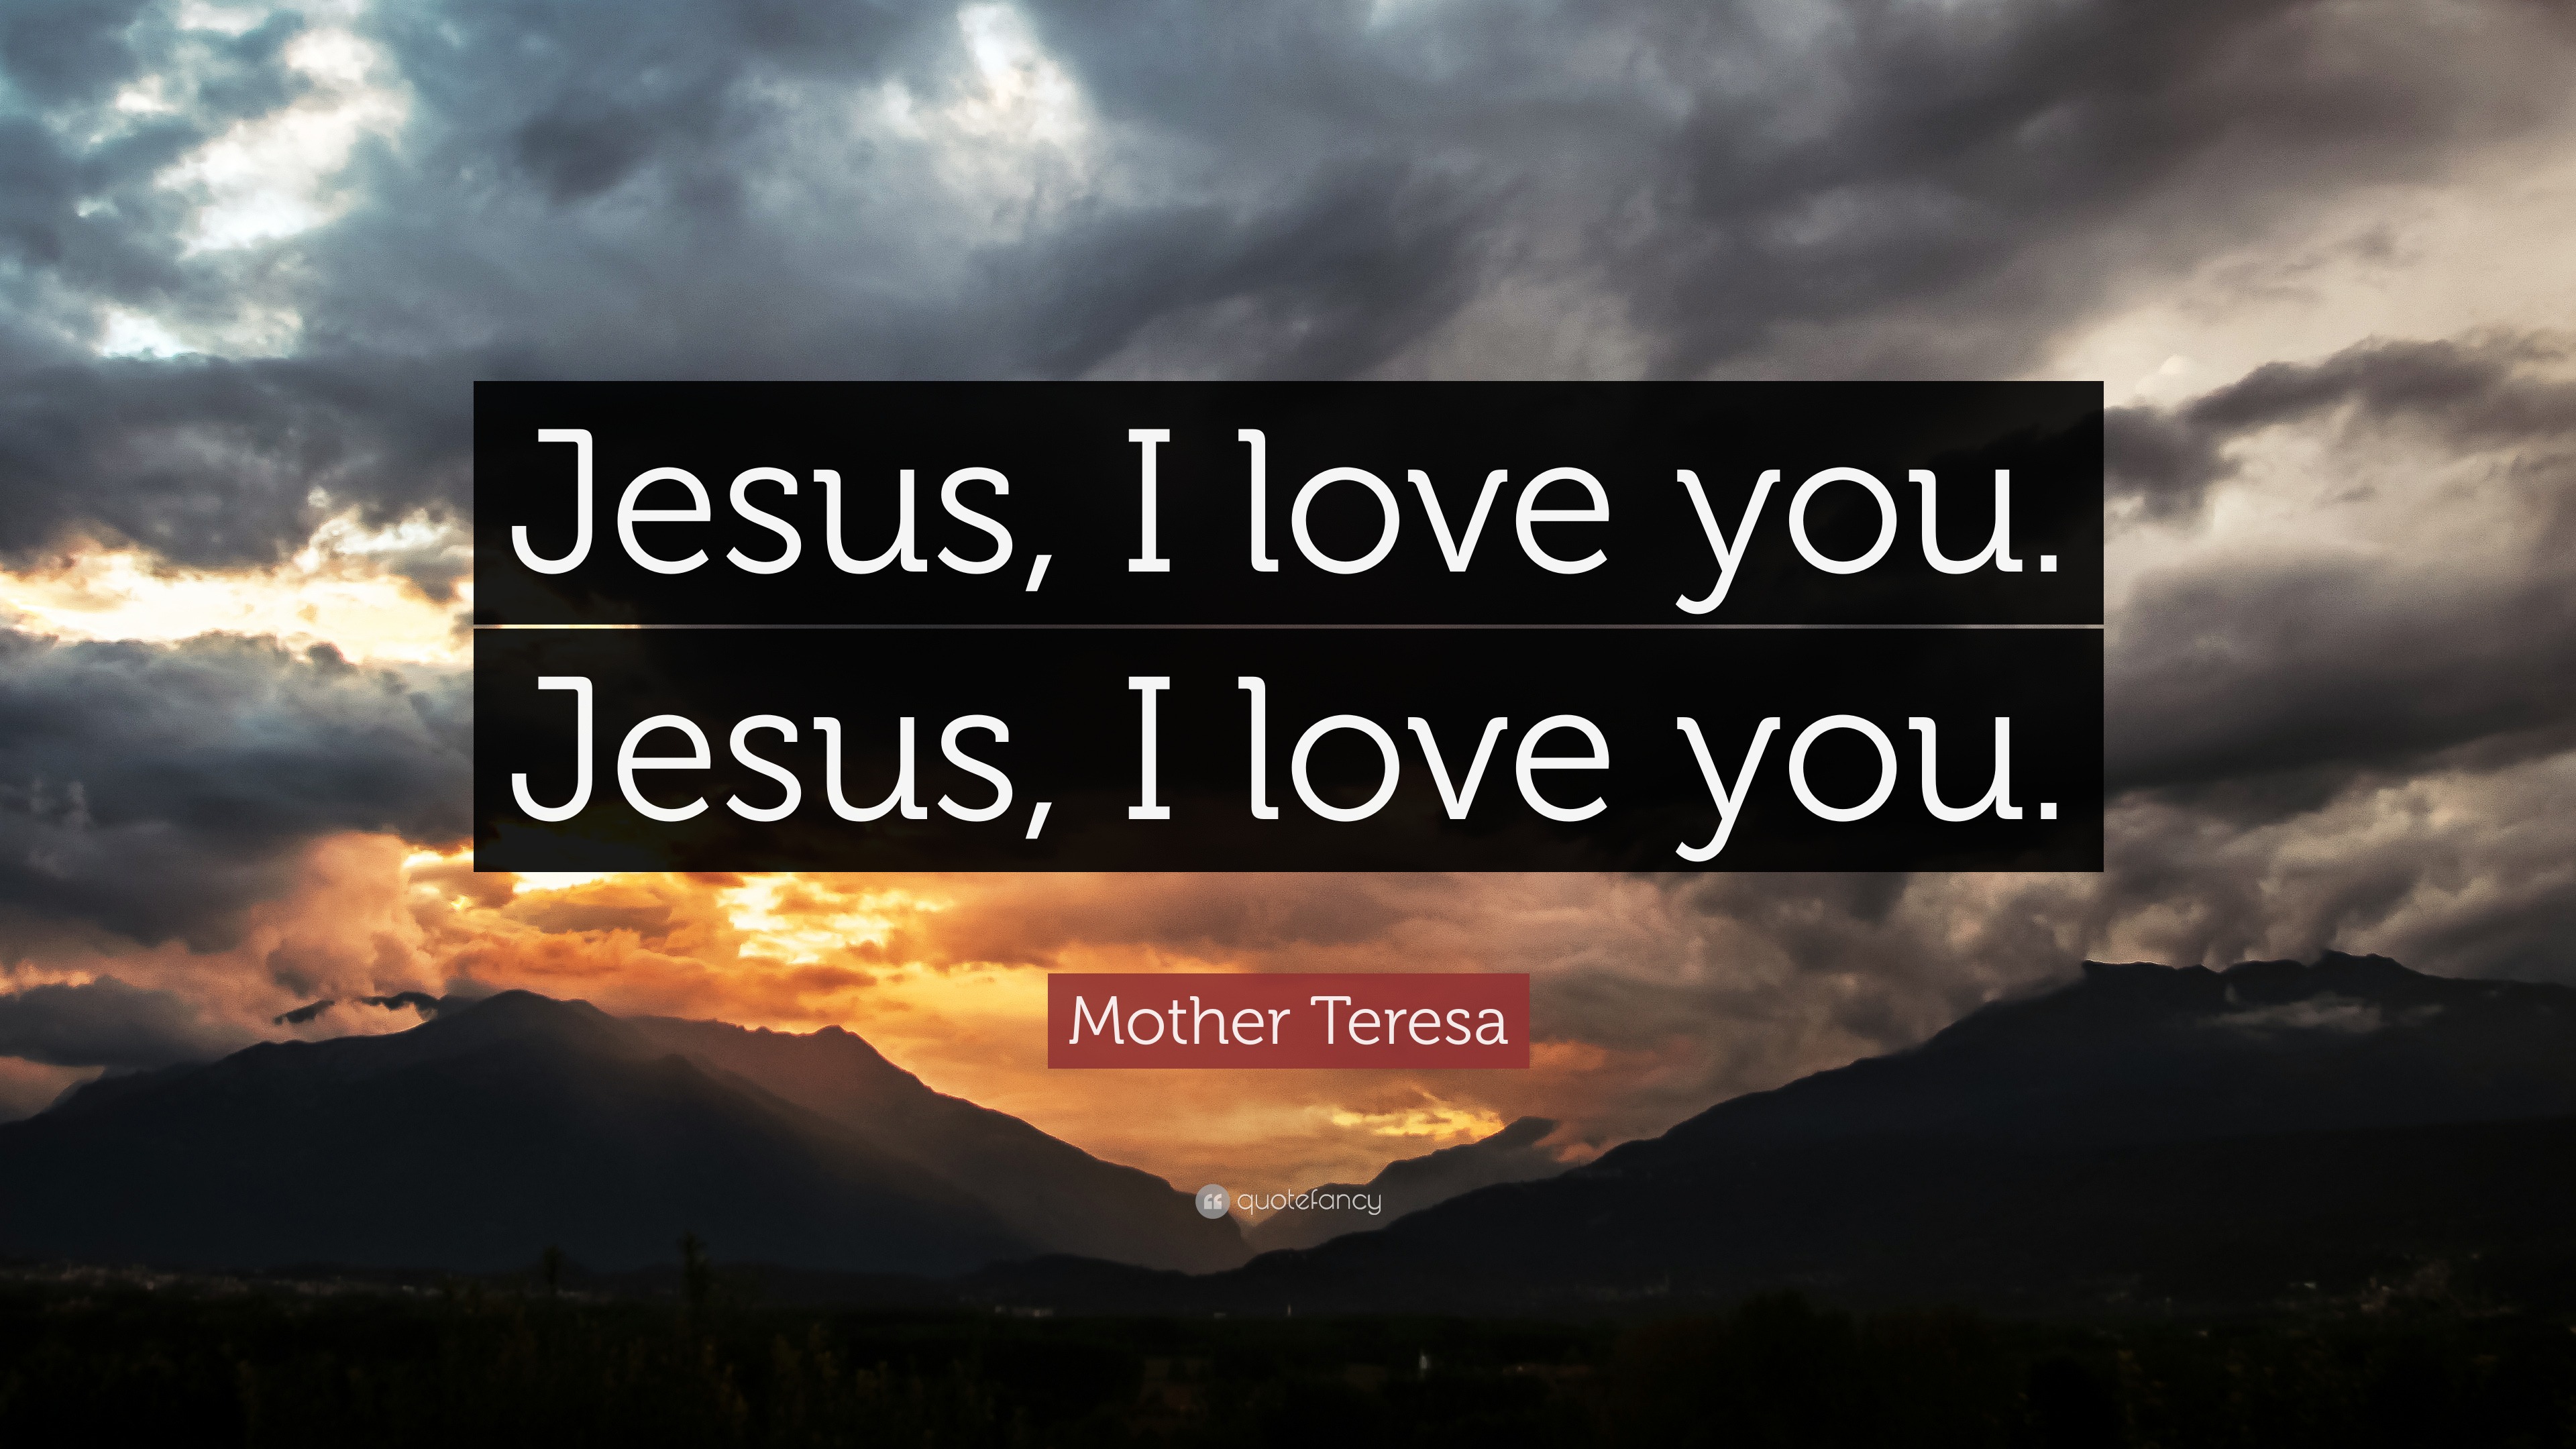 Mother Teresa Quote “Jesus I love you Jesus I love you